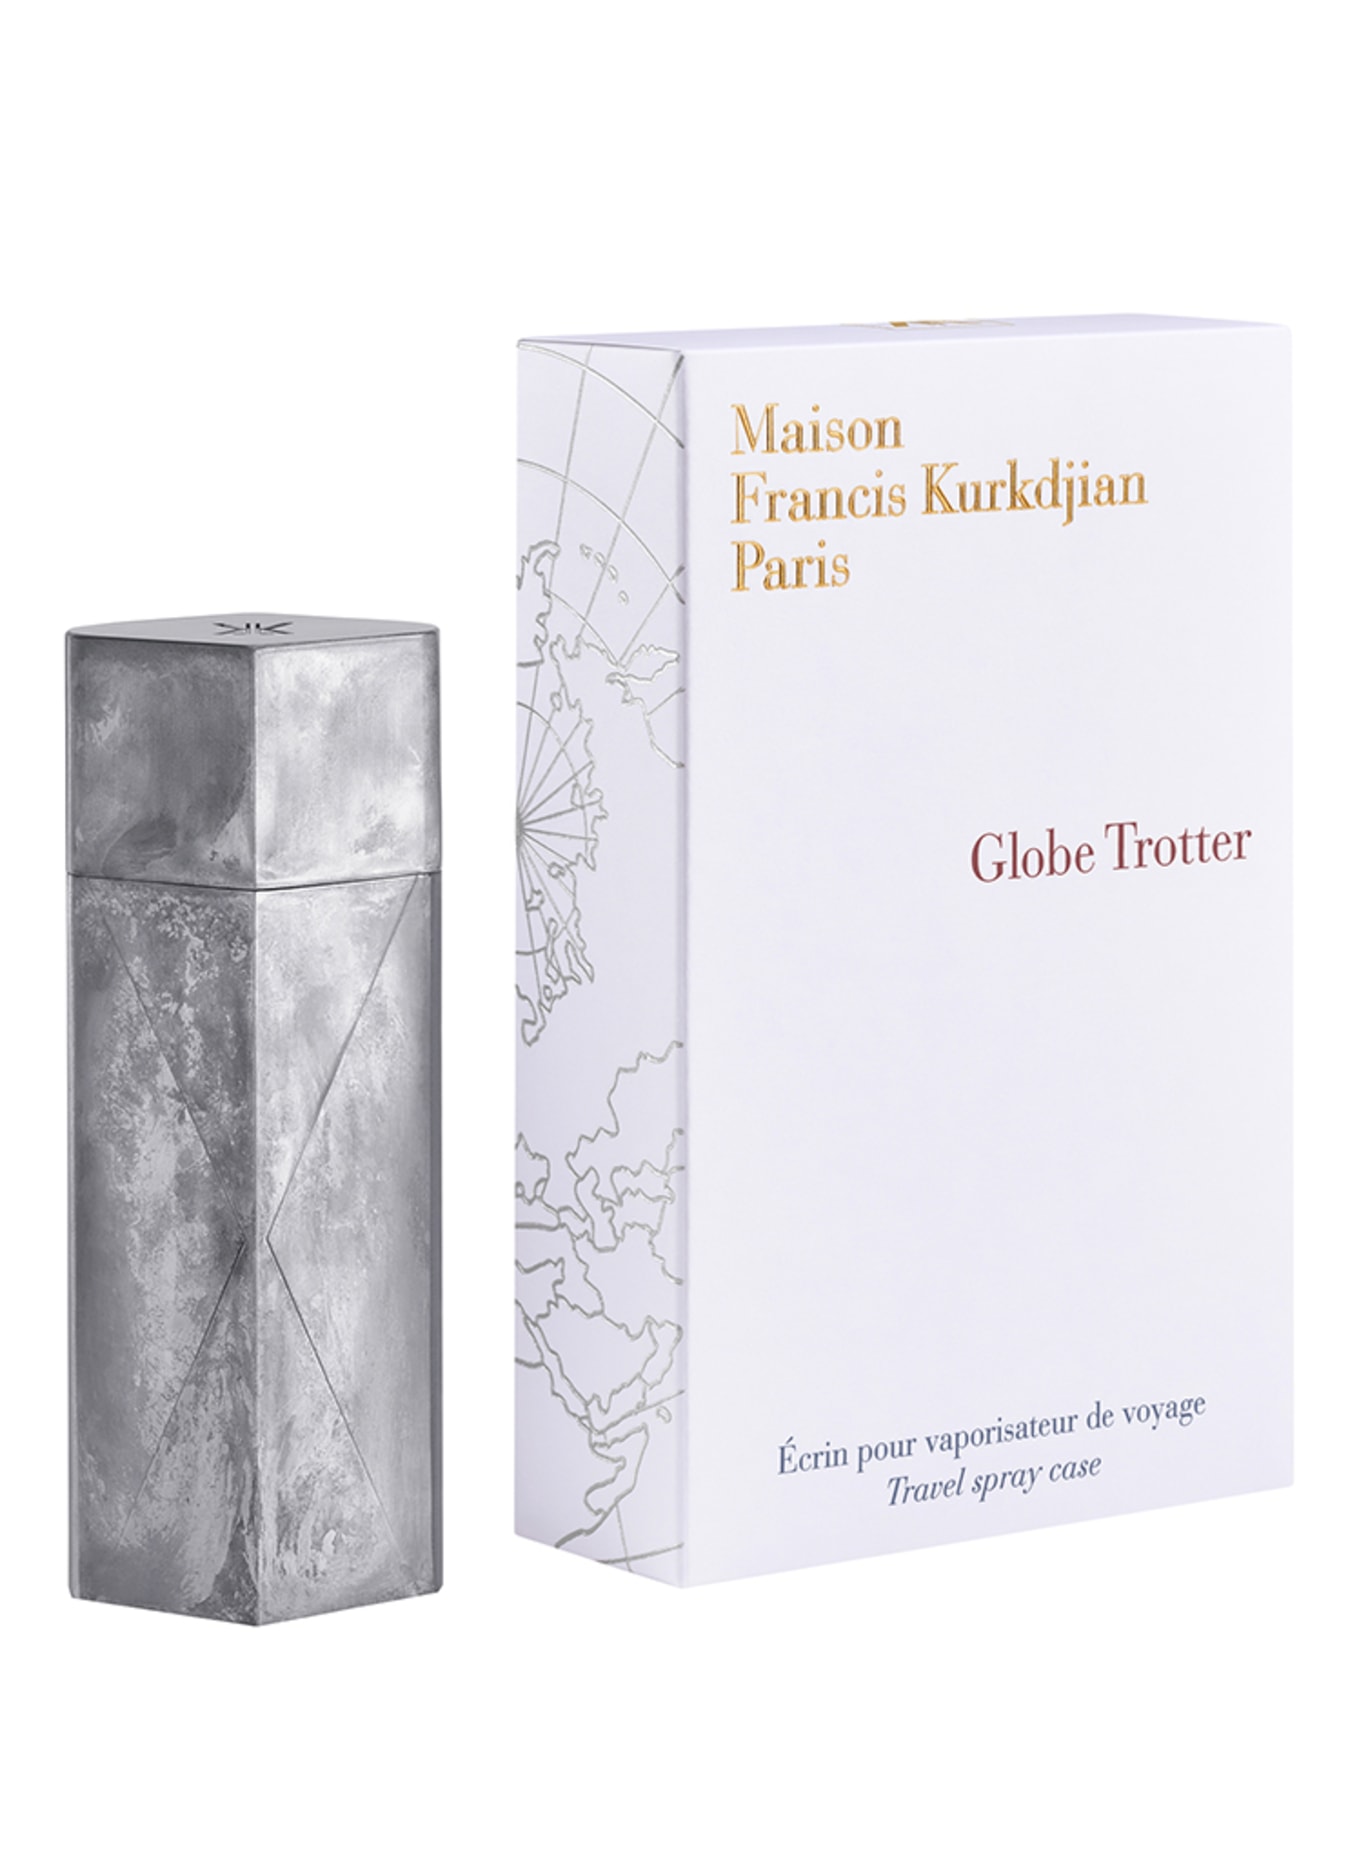 Maison Francis Kurkdjian Paris GLOBE TROTTER - ZINC EDITION (Bild 2)